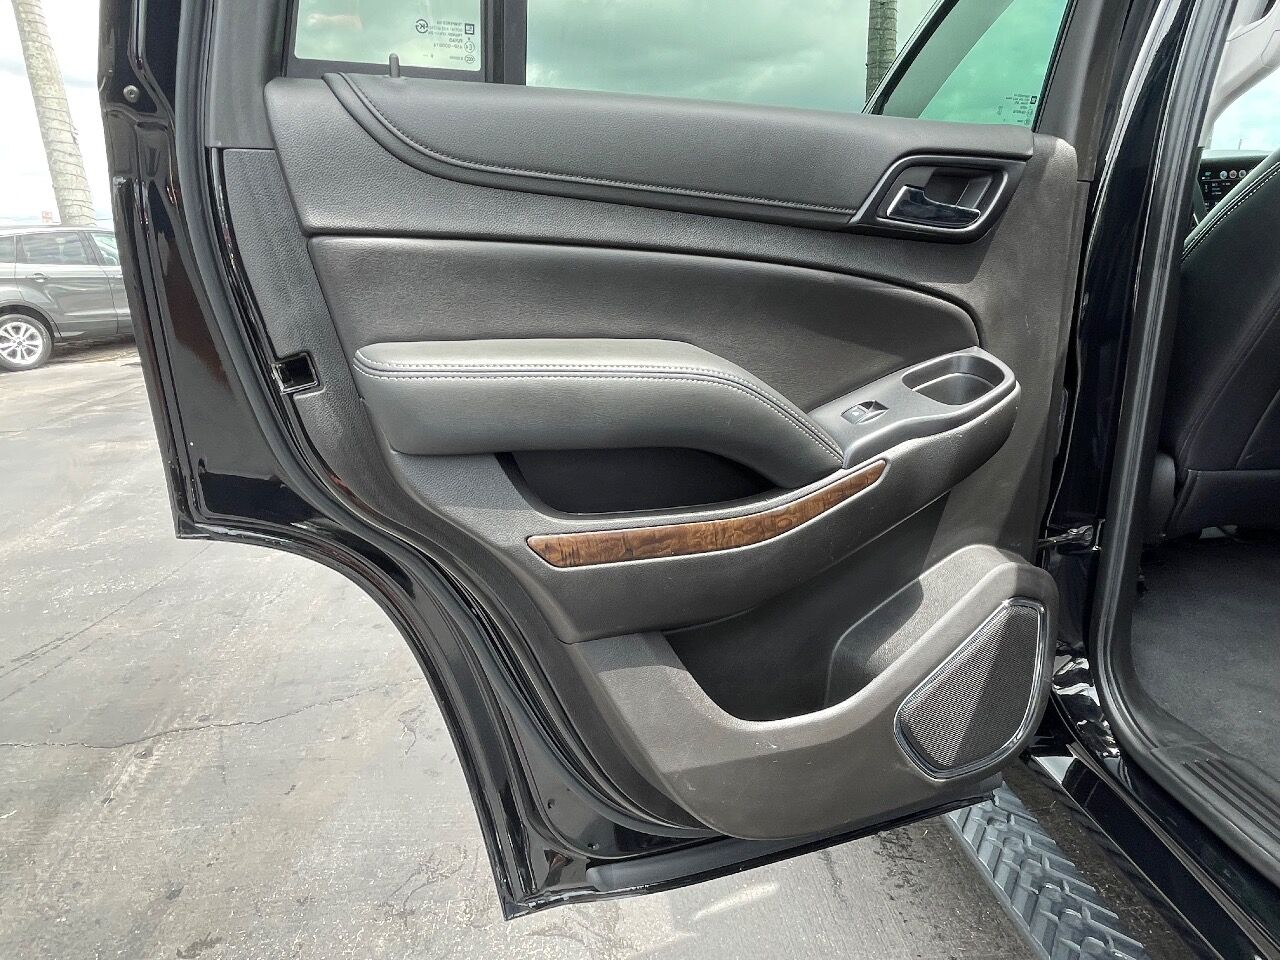 2020 Chevrolet Tahoe SUV - $29,900